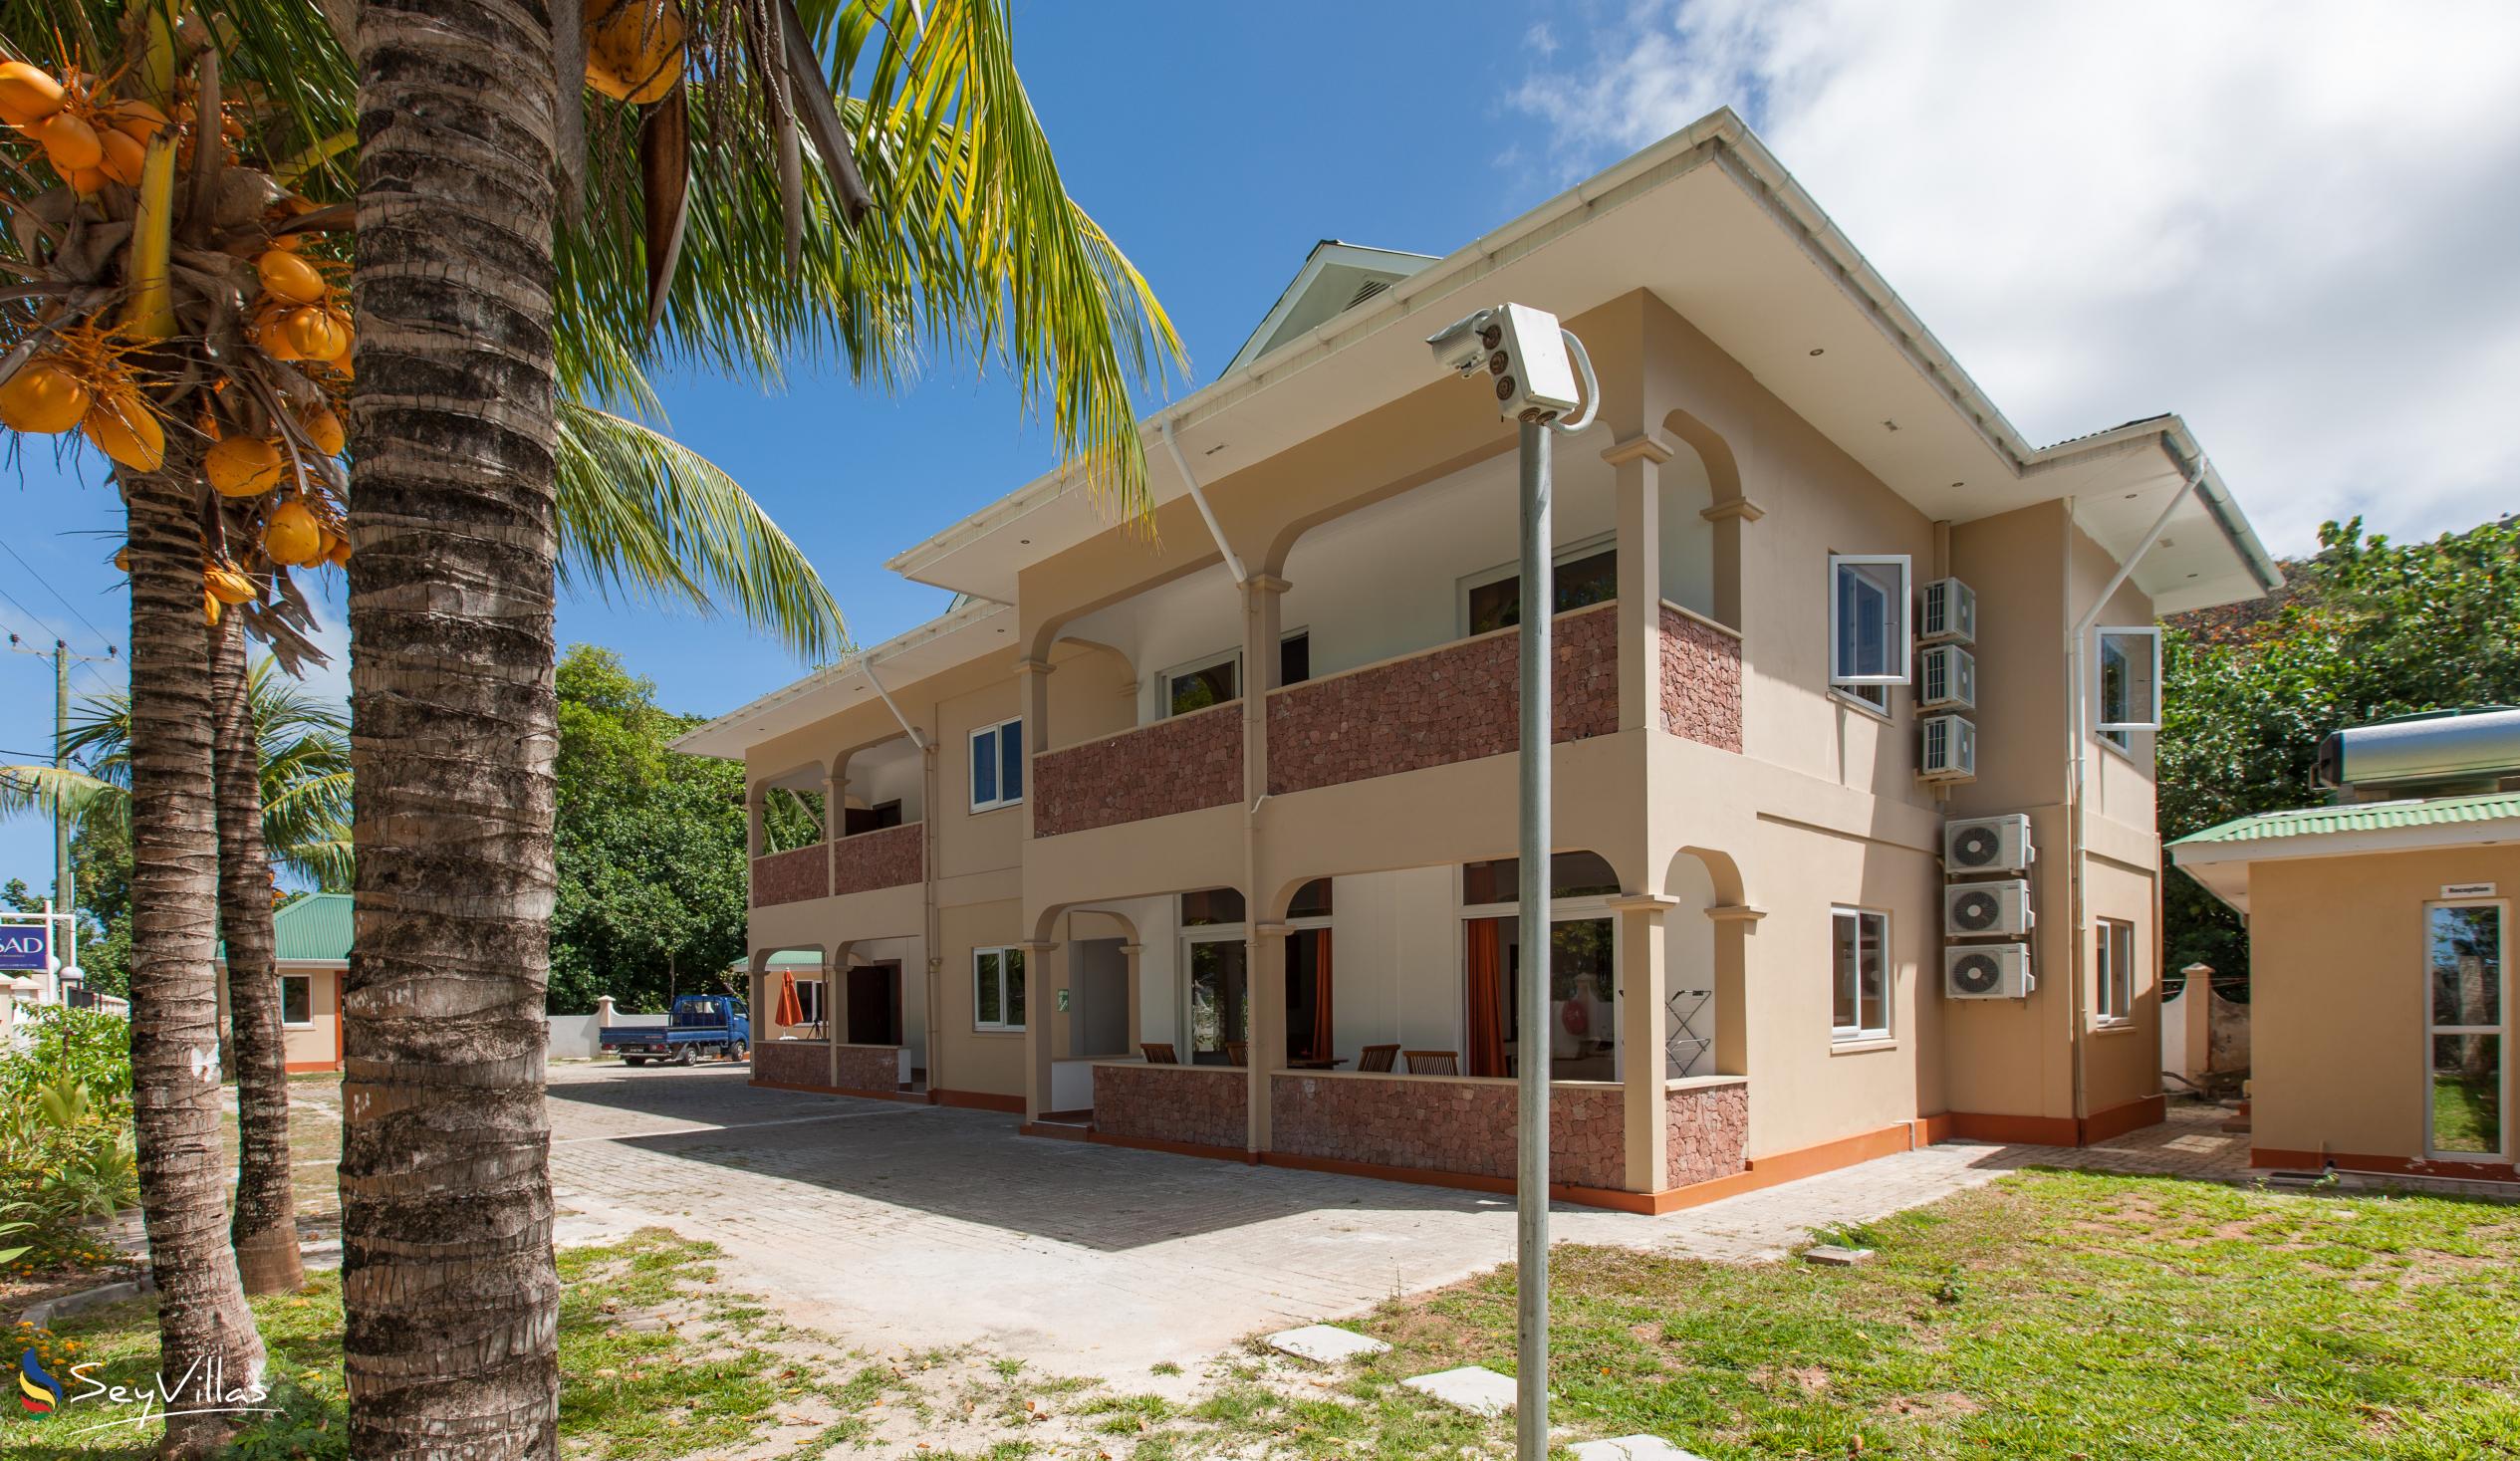 Foto 9: YASAD Luxury Beach Residence - Appartamento con 3 camere da letto - Praslin (Seychelles)